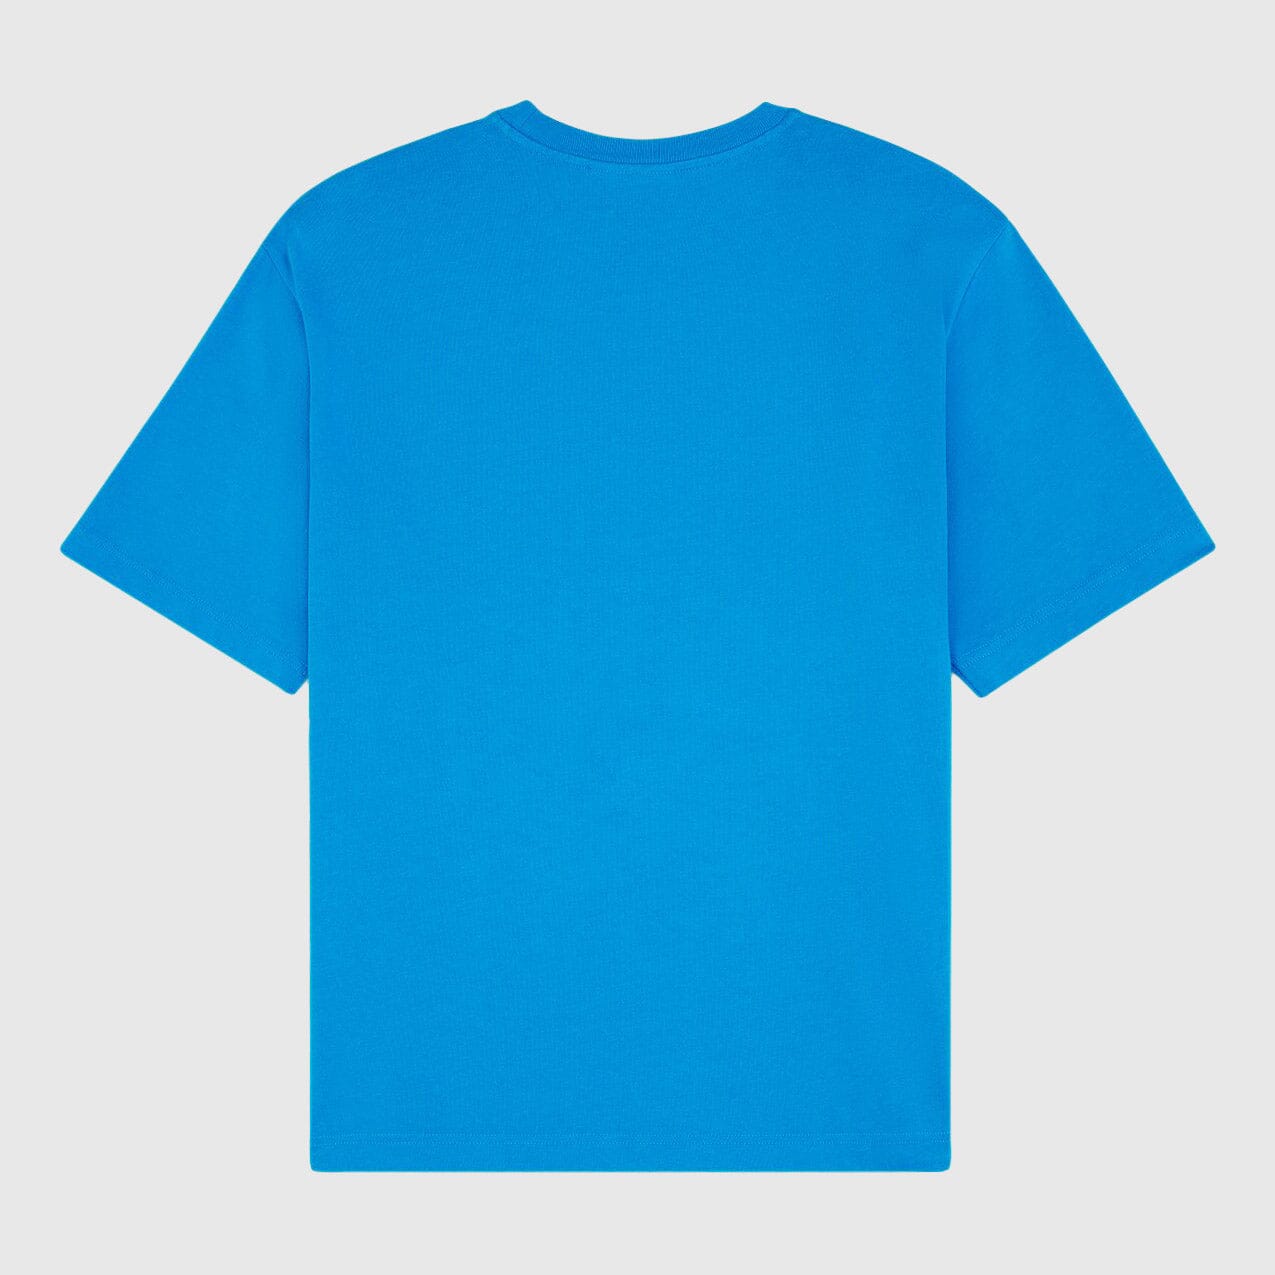 Maison Kitsuné Go Faster Oversize T-shirt - Enamel Blue T-shirt Maison Kitsuné 